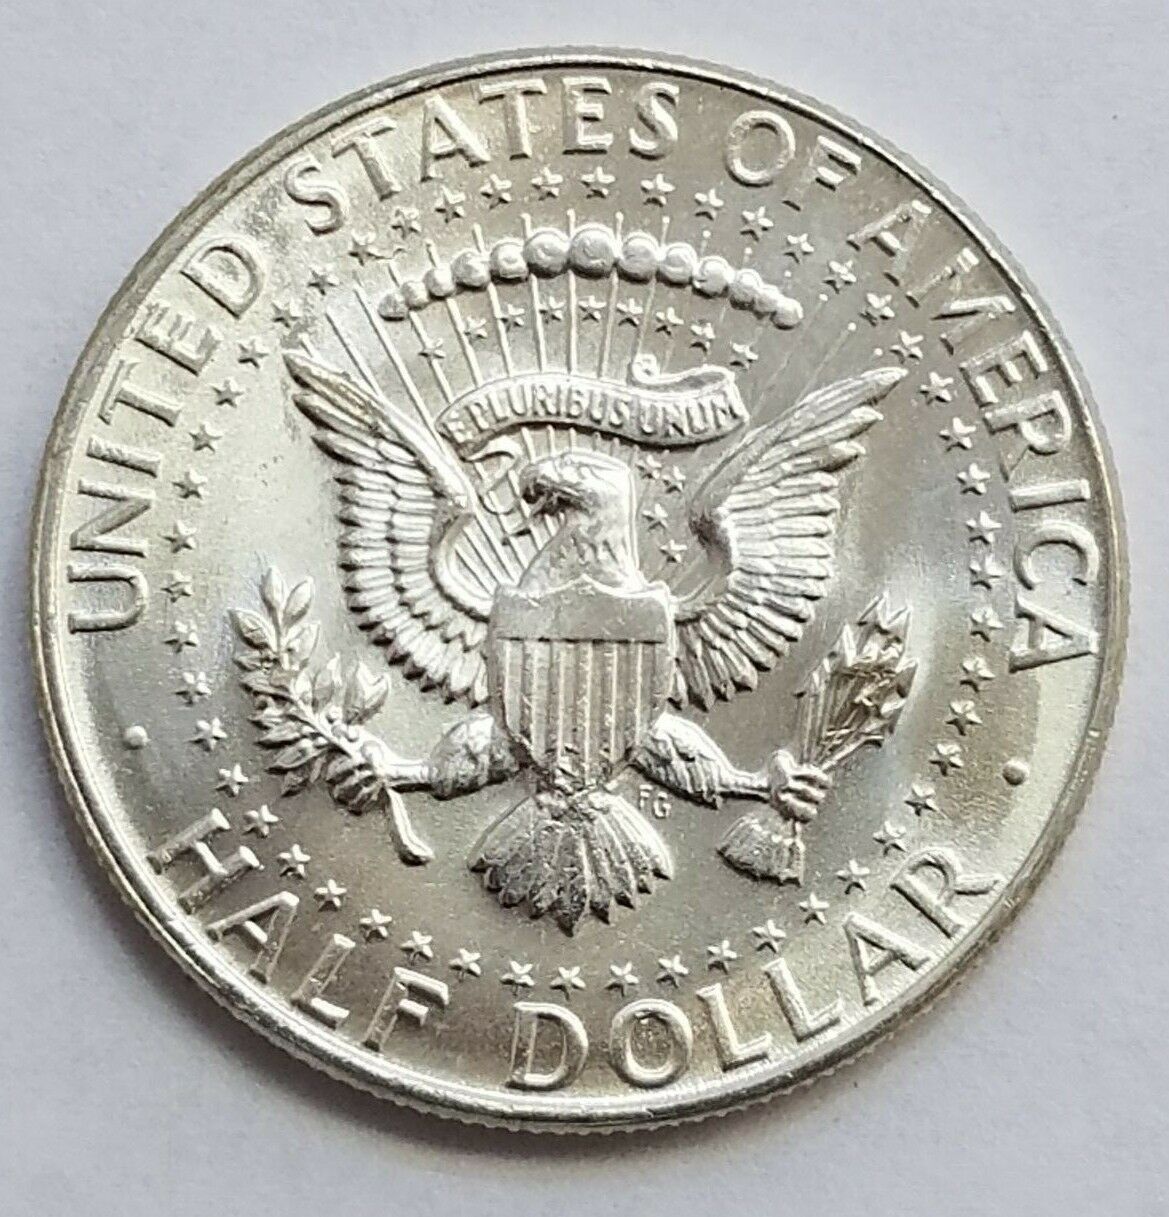 1964 Kennedy Half Dollar Reverse